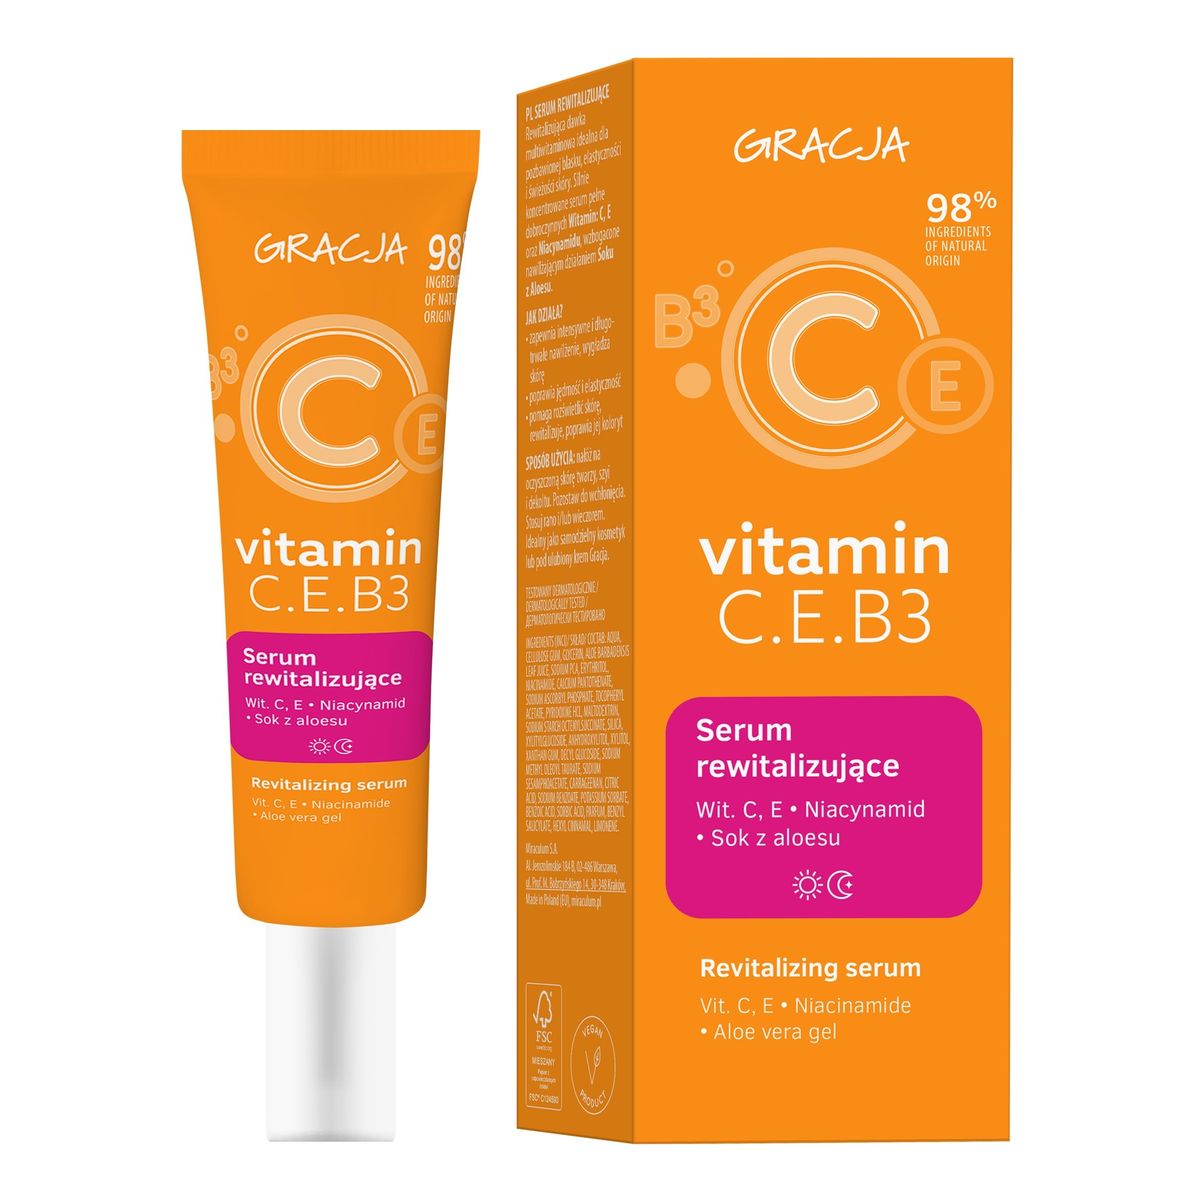 Miraculum Gracja vitamin c.e.b3 serum rewitalizujące do twarzy 30 ml 30ml